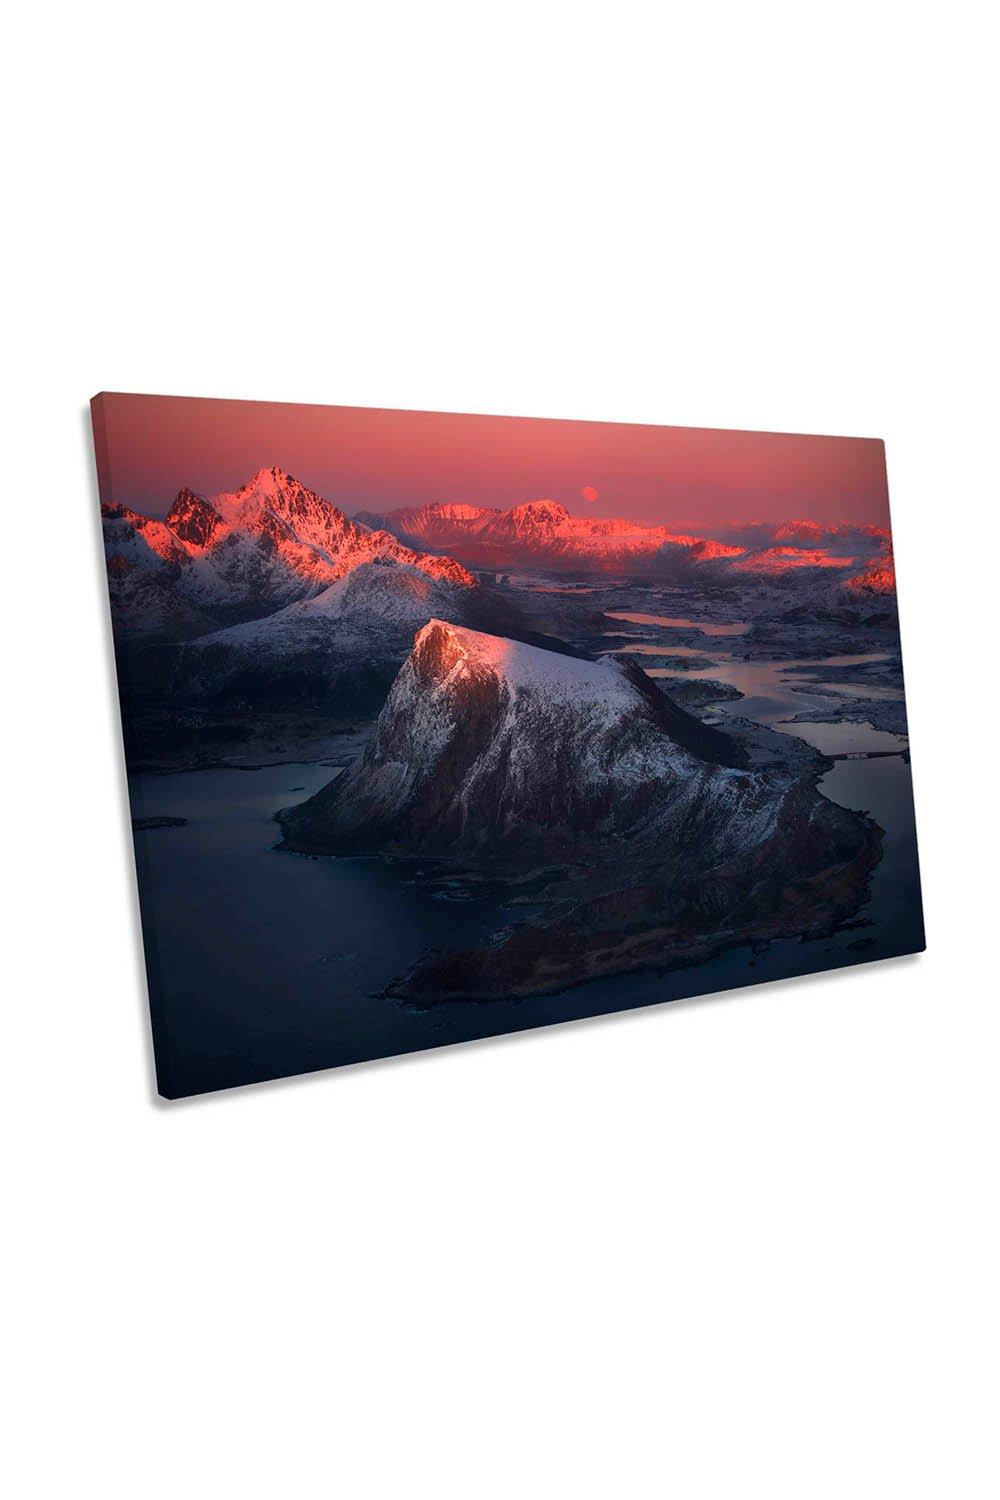 Here Live Dragons Lofoten Norway Landscape Canvas Wall Art Picture Print